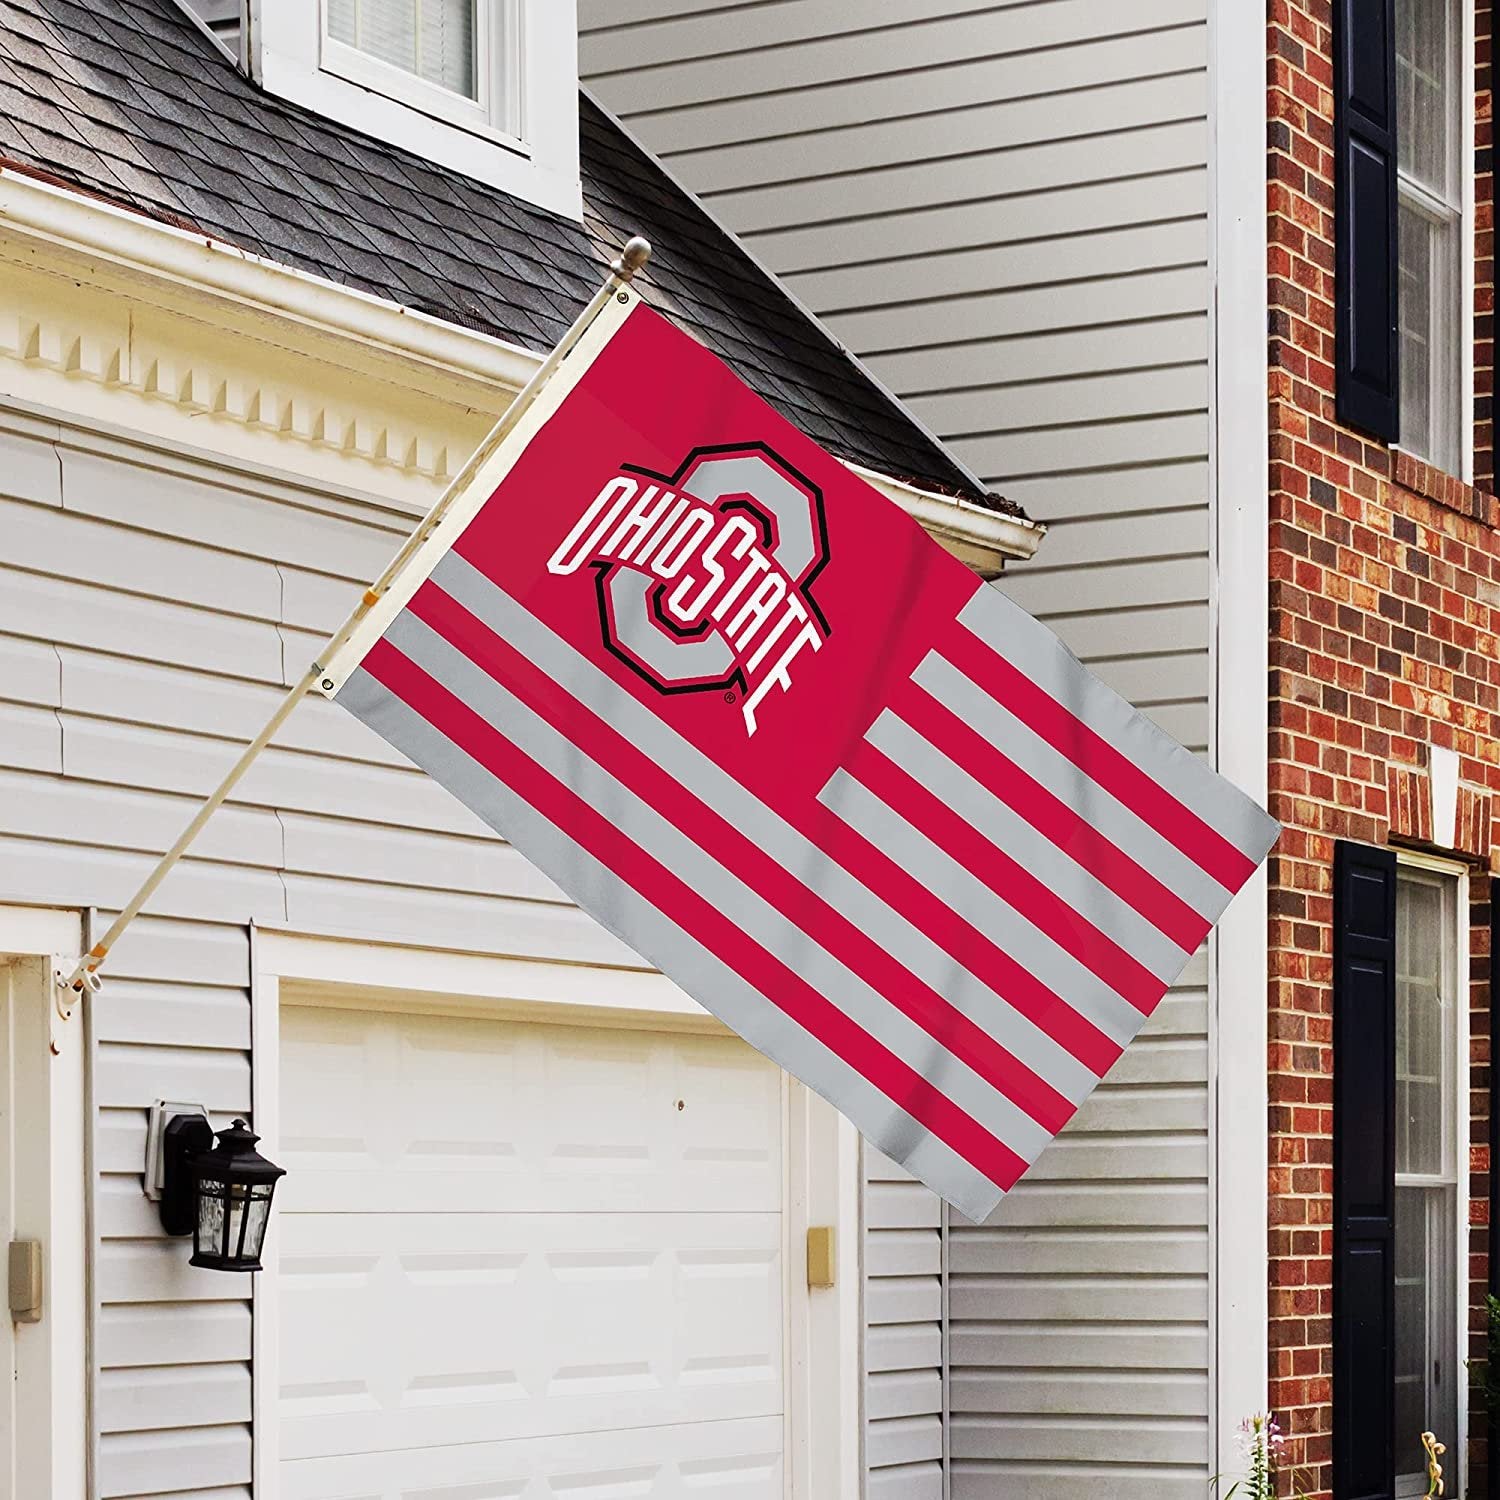 Ohio State University Buckeyes Premium 3x5 Feet Flag Banner, Stripes Design, Metal Grommets, Outdoor Use, Single Sided